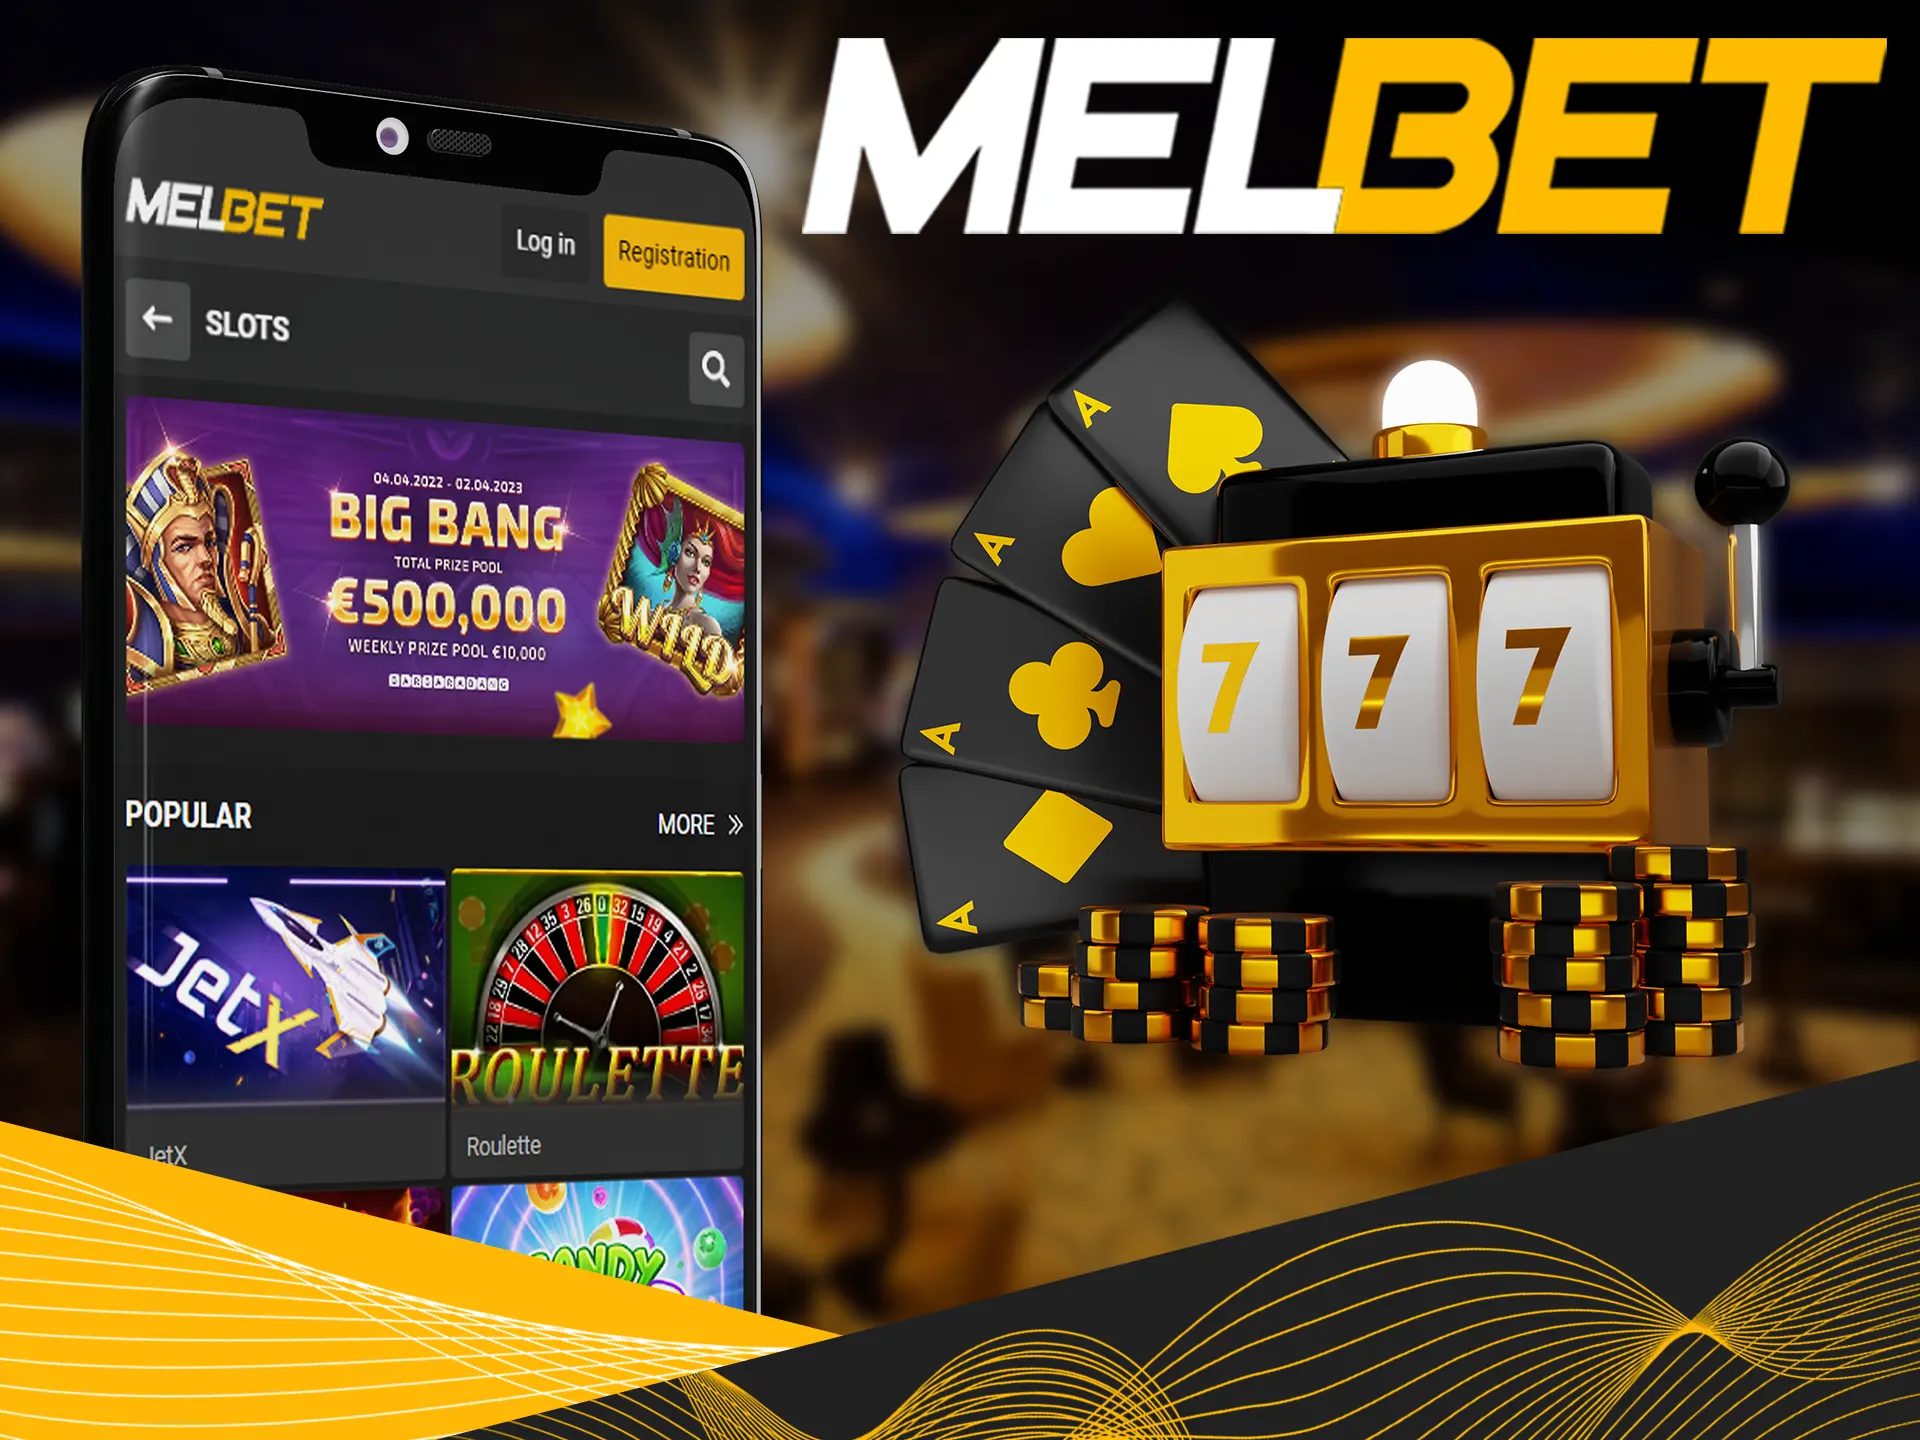 Play casino games using Melbet app.